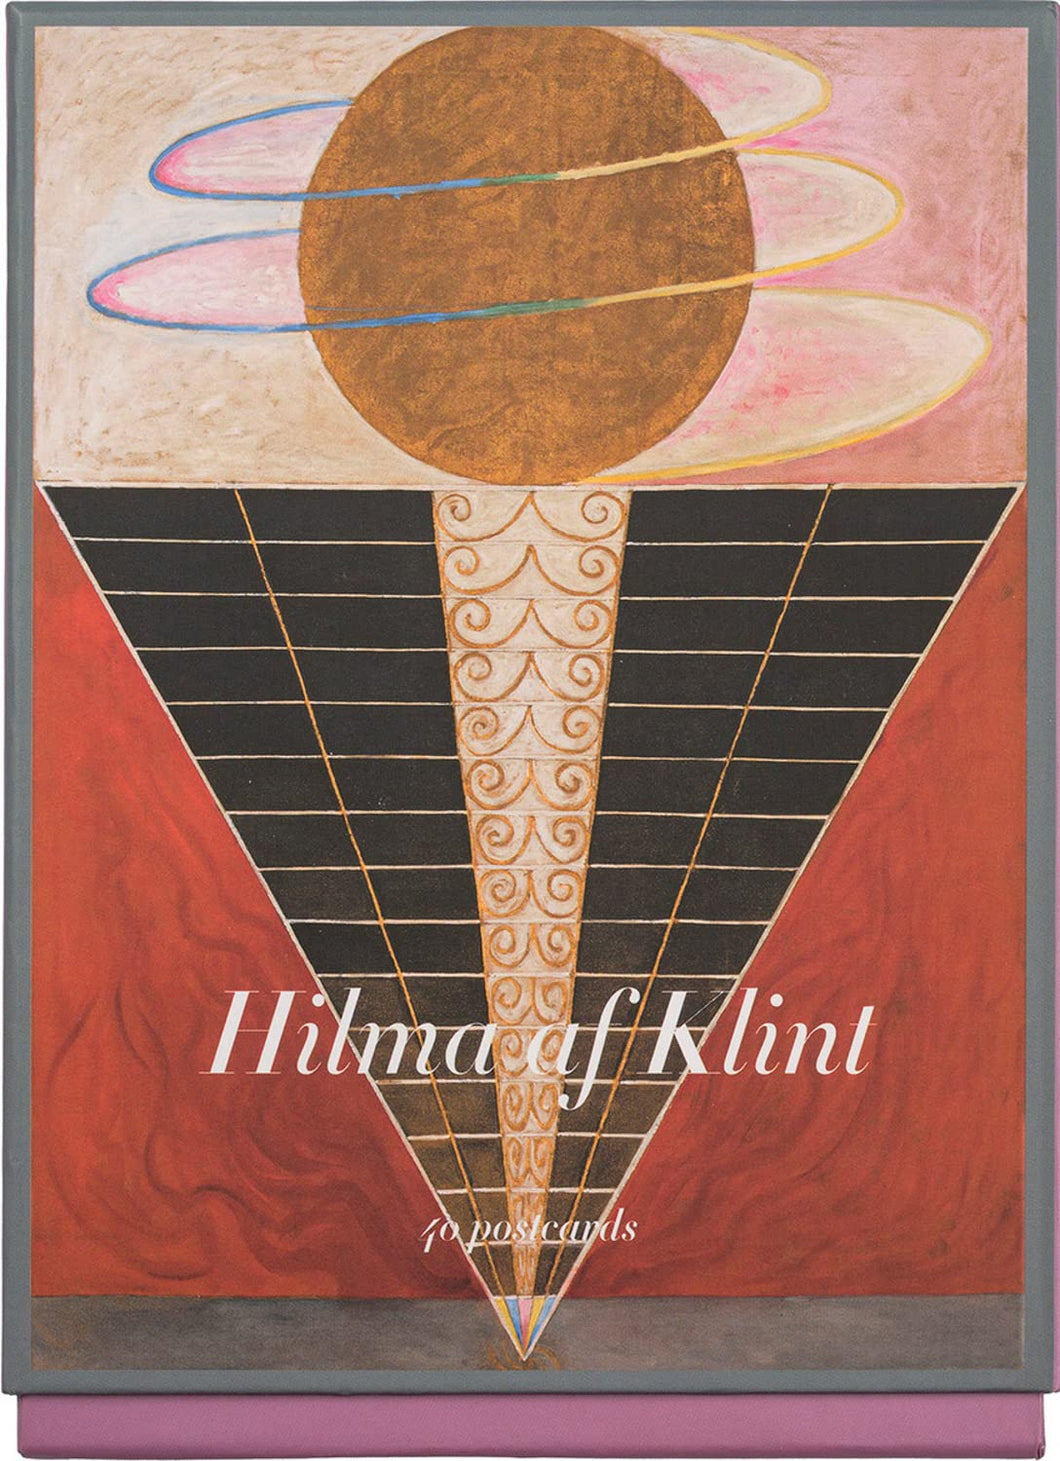 Hilma af Klint: Altarpieces: Postcard Box Card Book